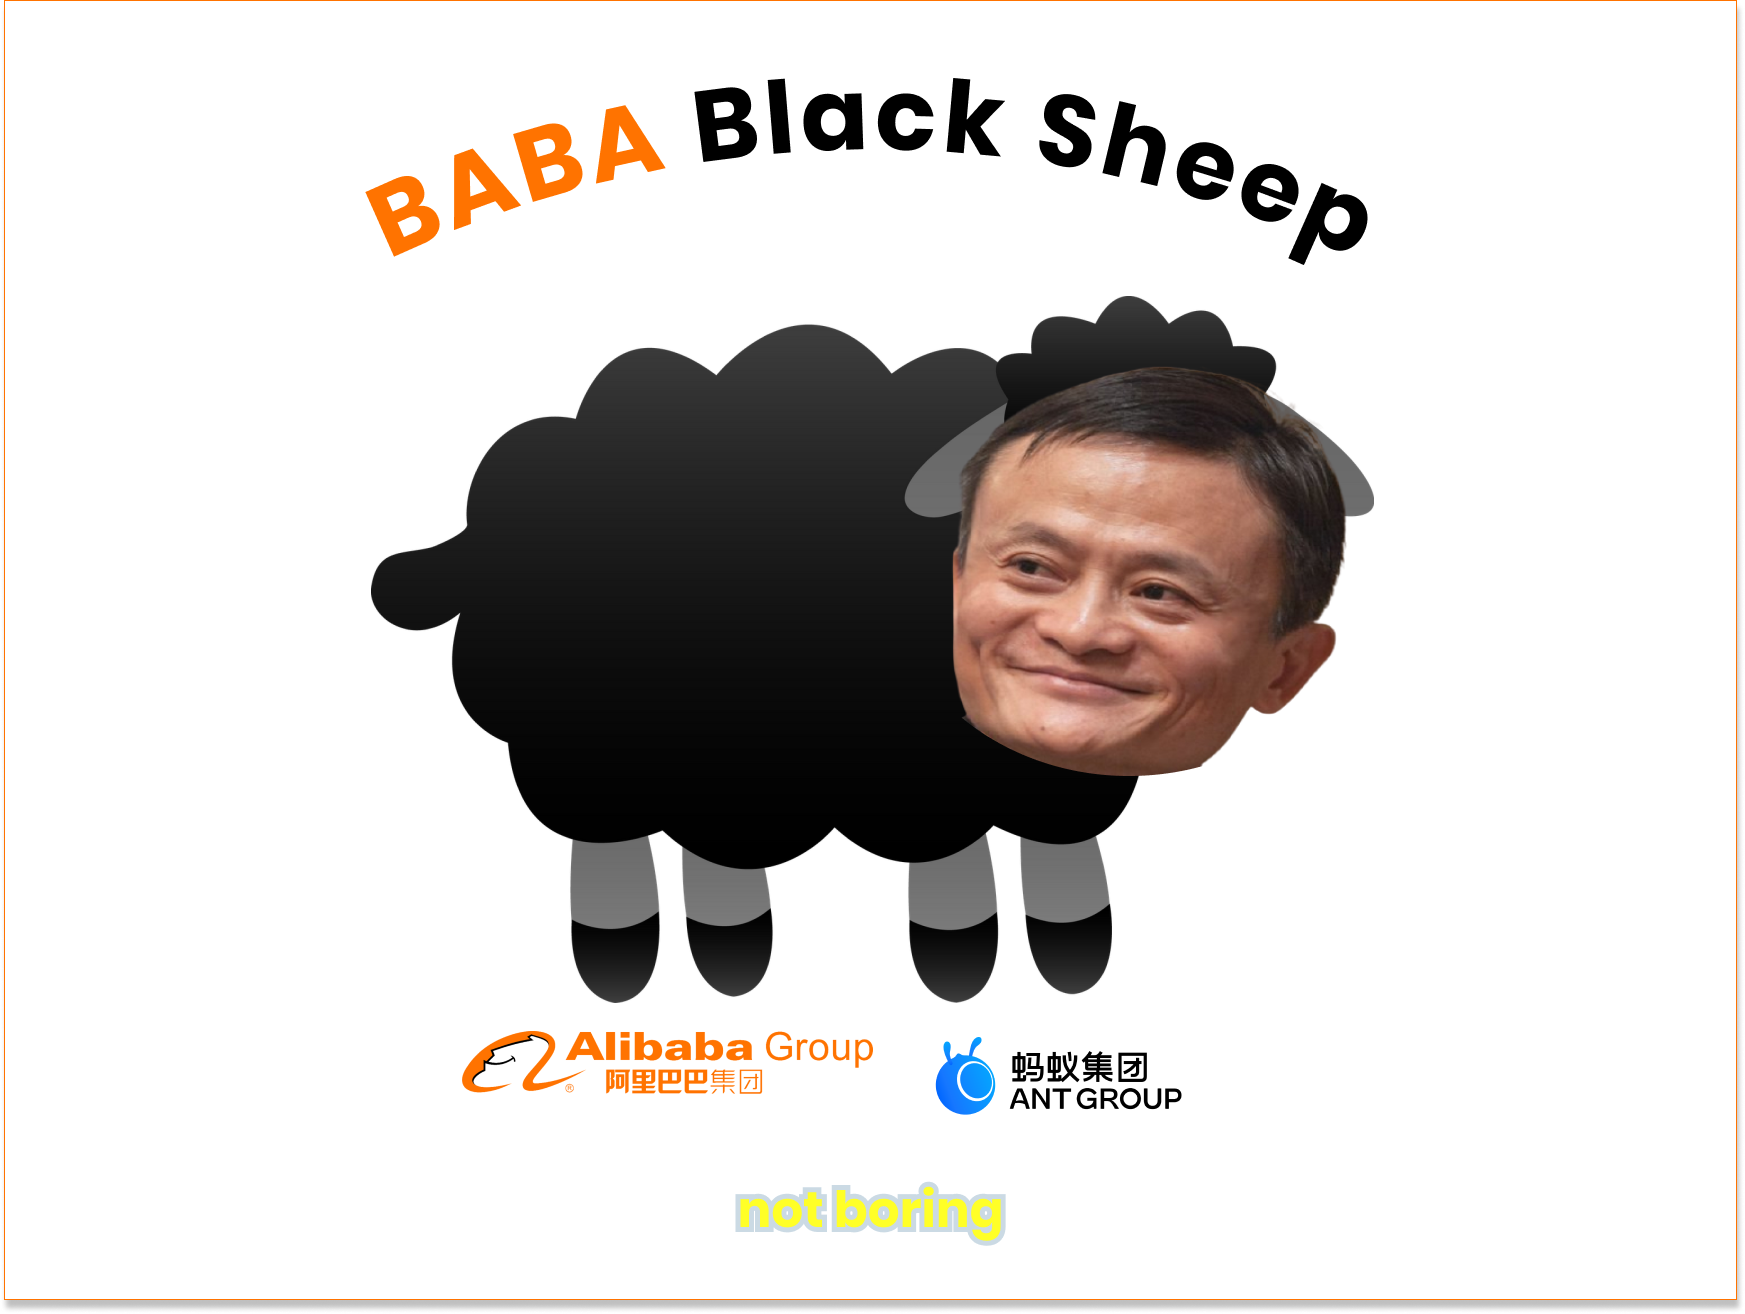 BABA Black Sheep - Not Boring by Packy McCormick